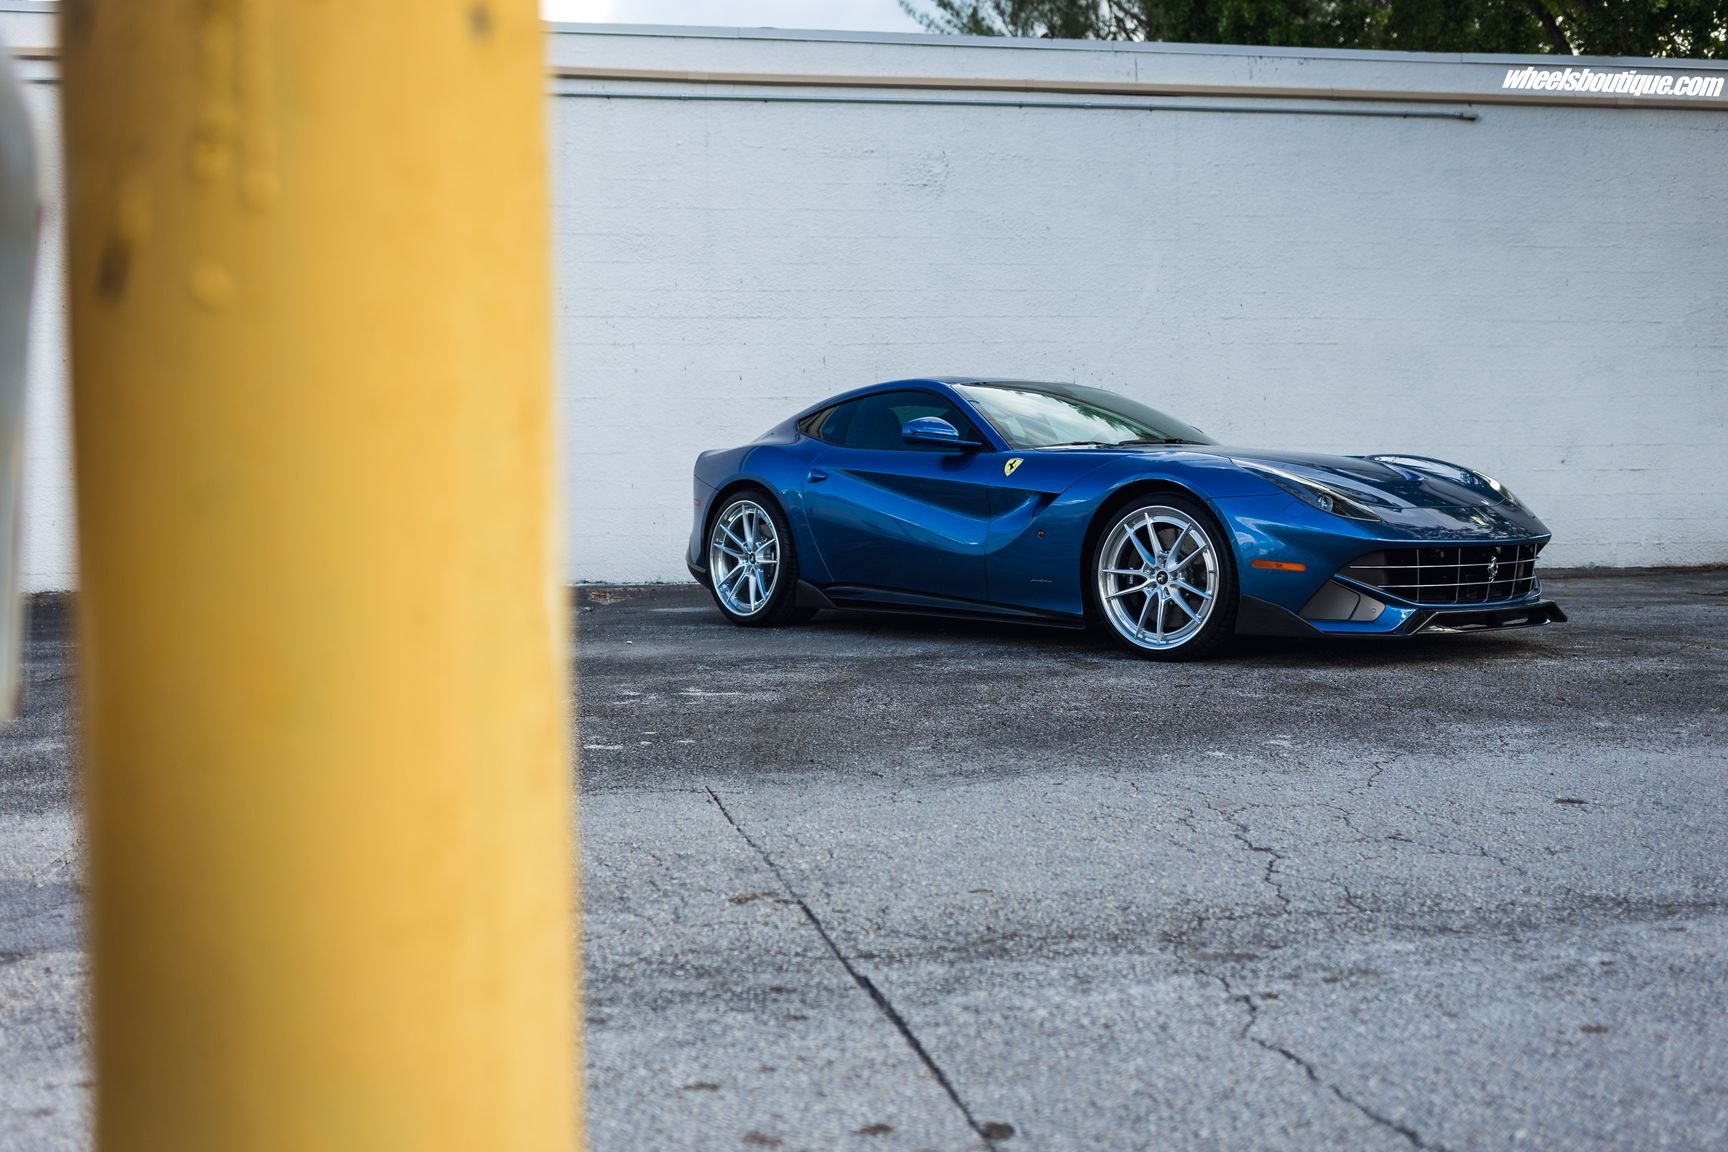 Chrome Anrky Wheels on Blue Ferrari F12 - Photo by Anrky Wheels